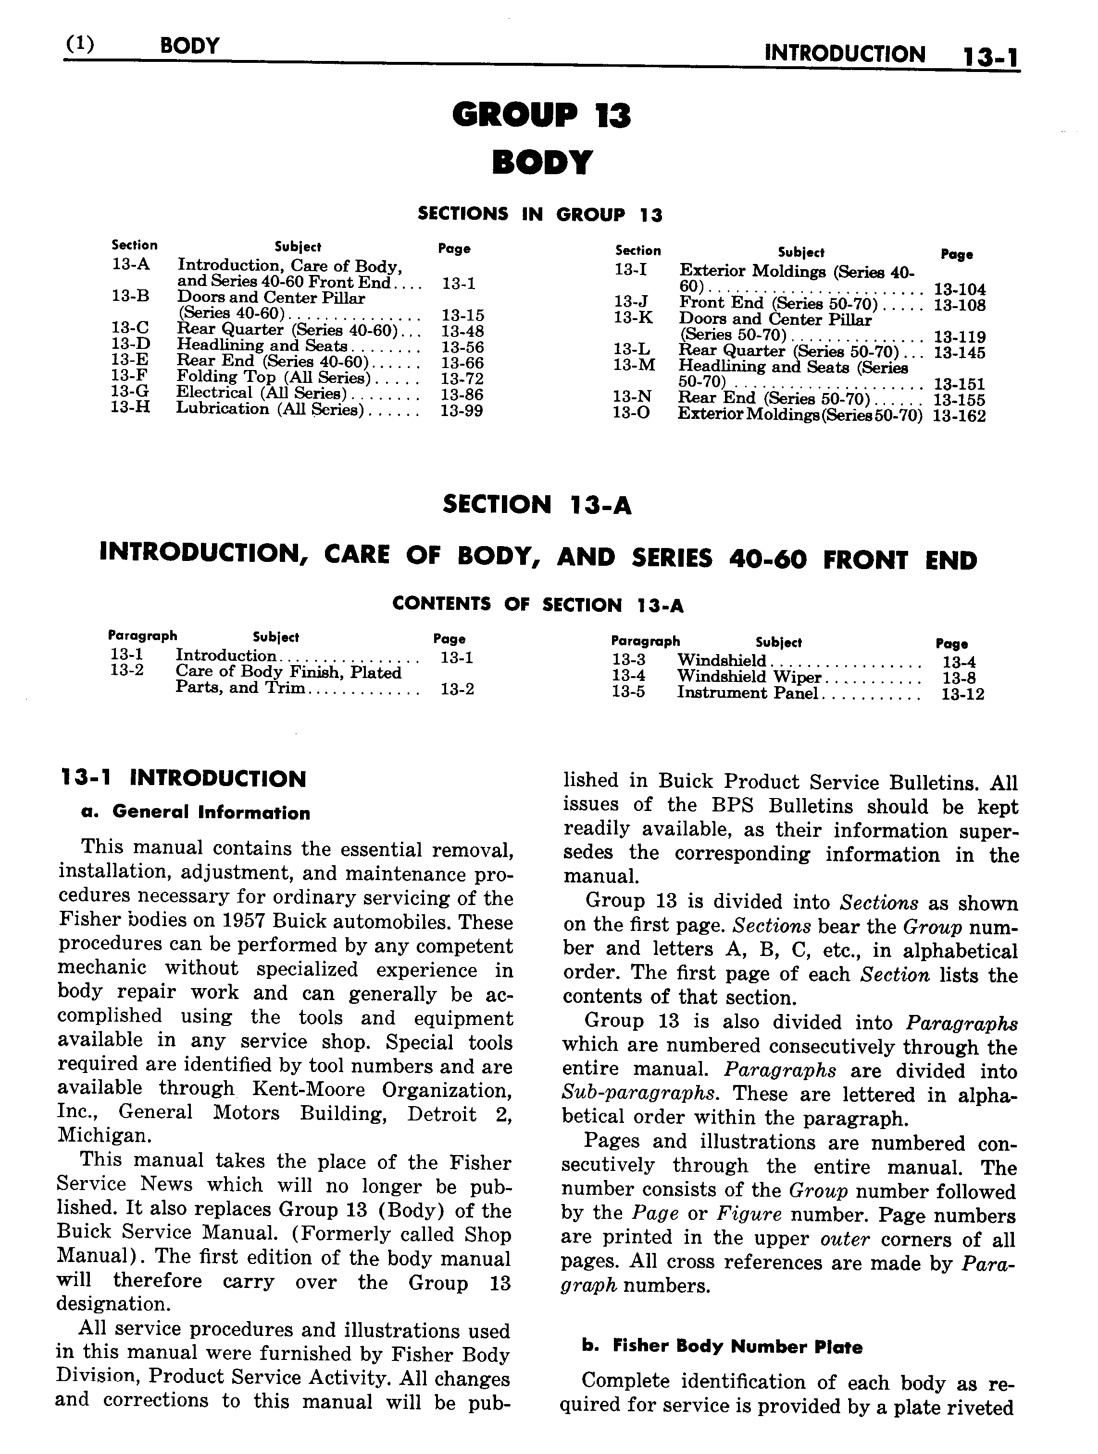 n_1957 Buick Body Service Manual-003-003.jpg